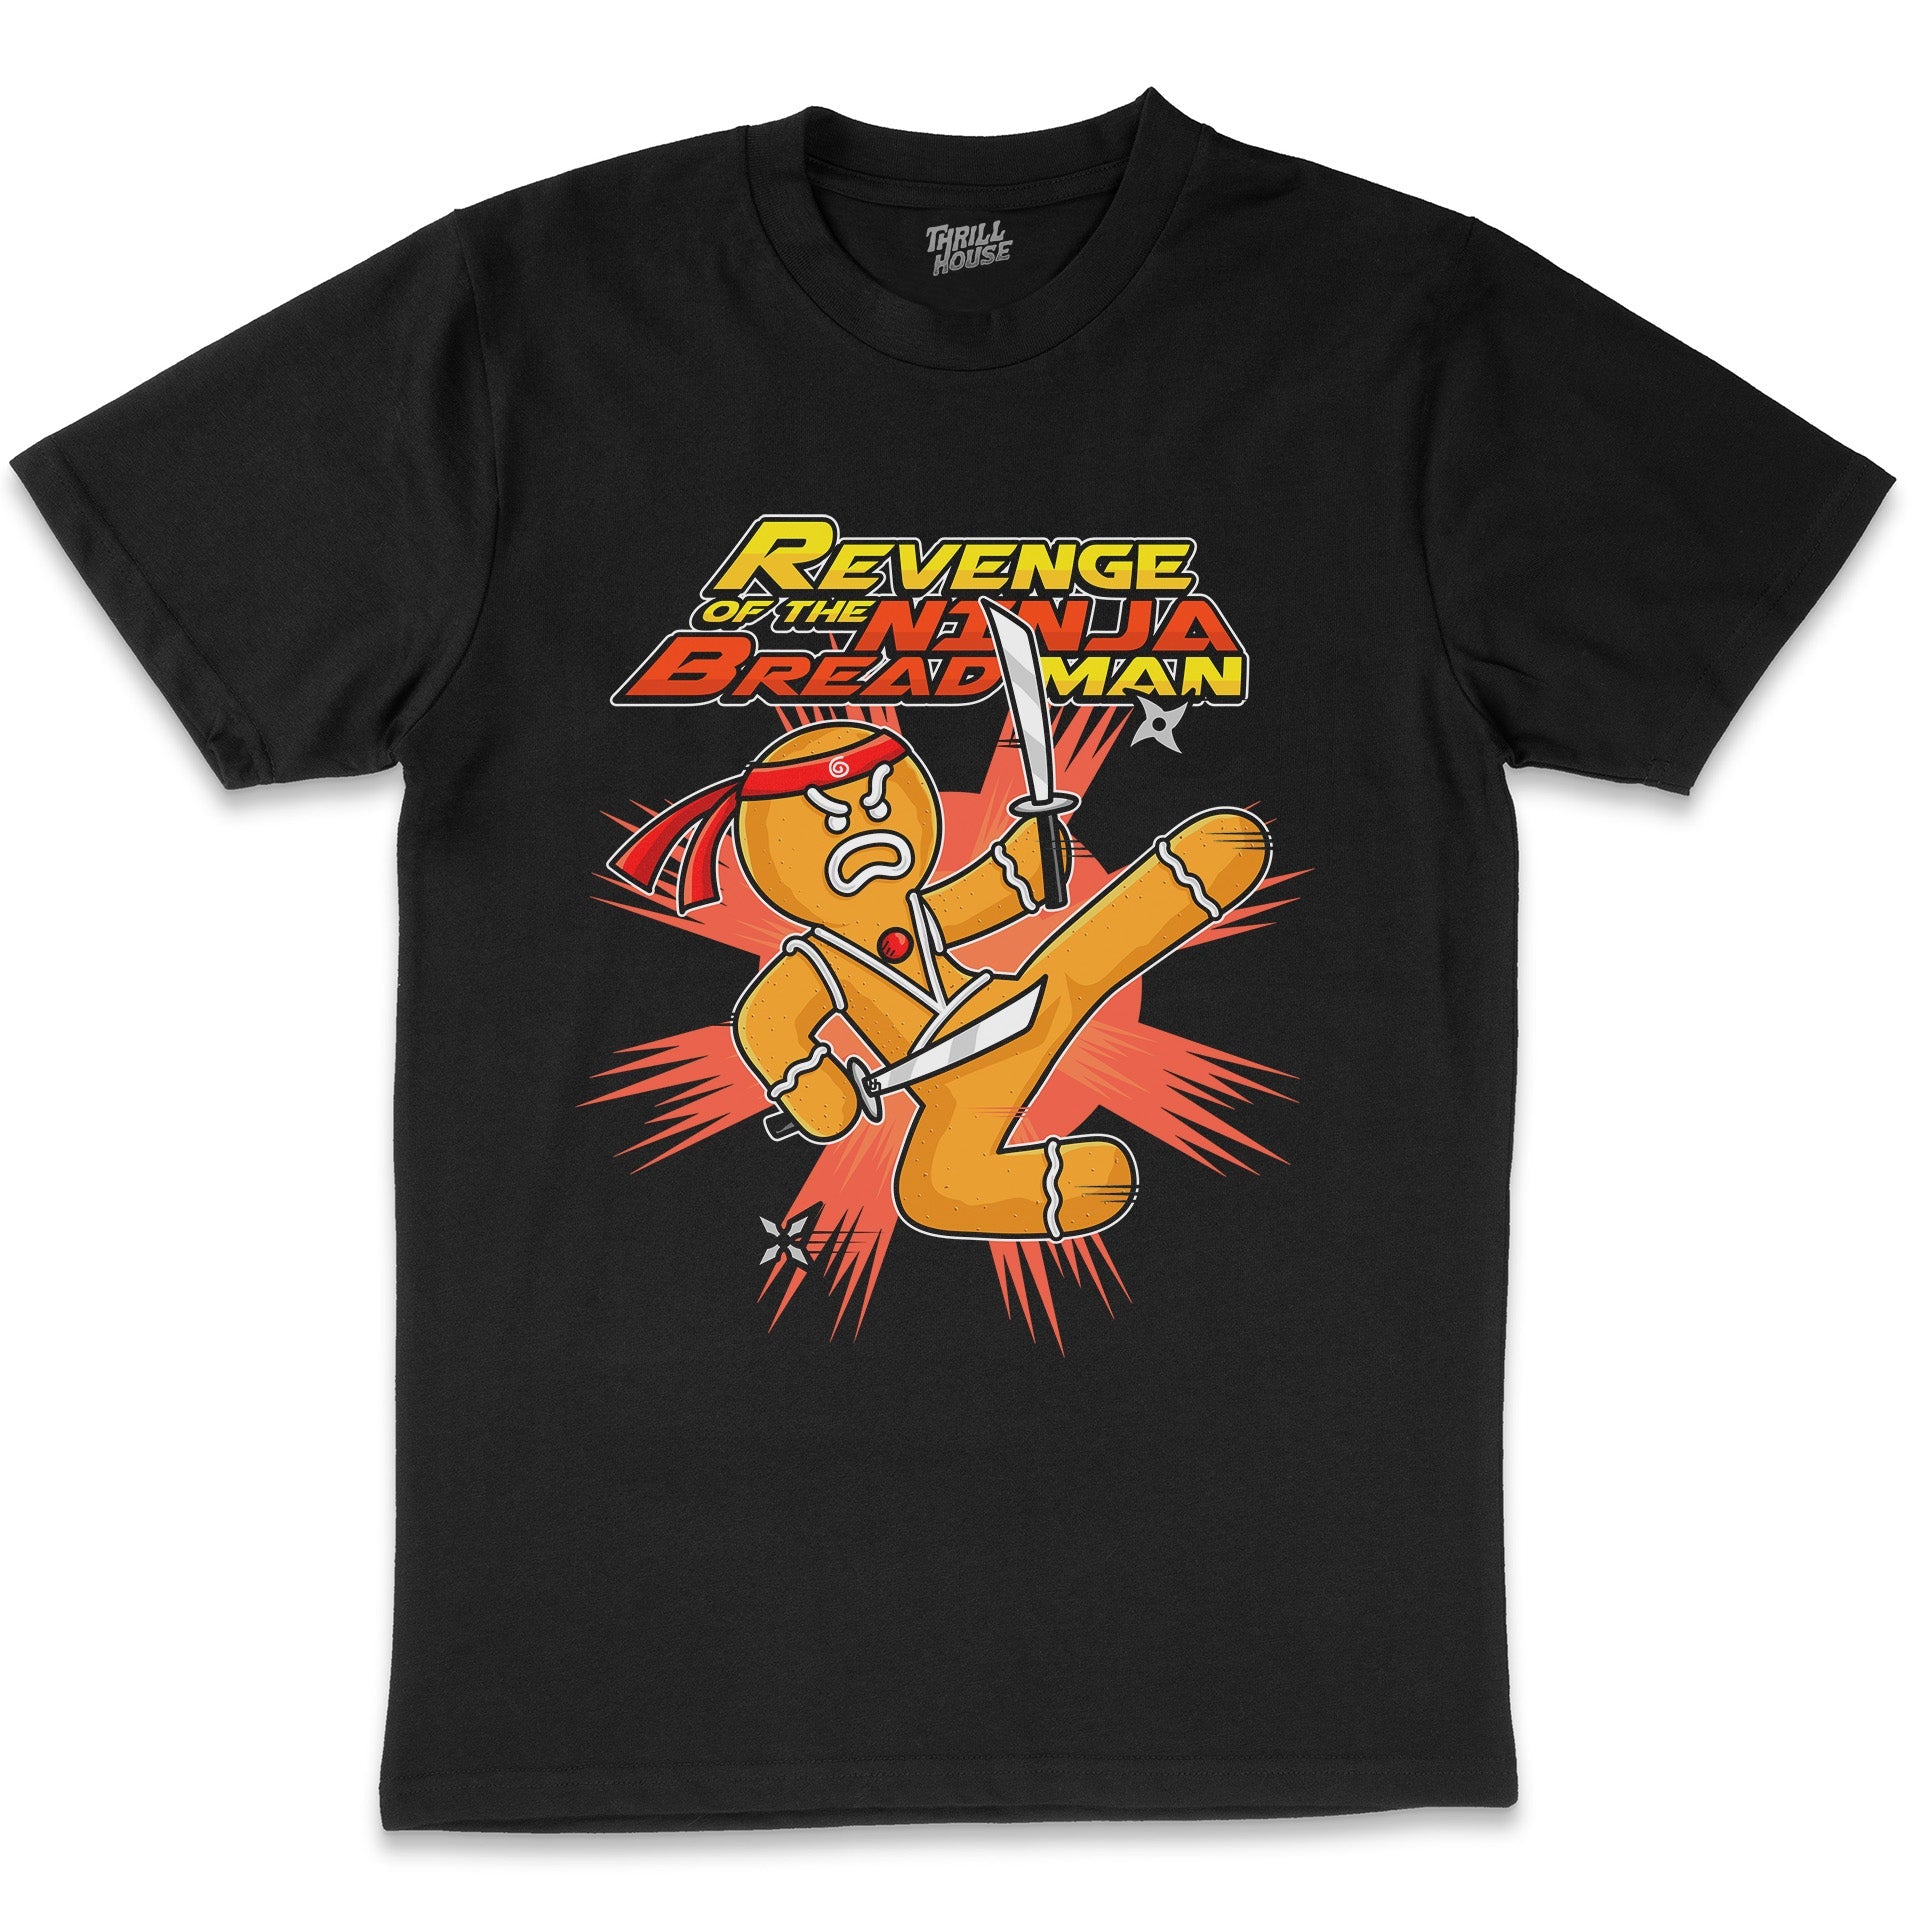 Revenge of the Ninja Bread Man Funny Ginger Bread Parody Foodie Cotton T-Shirt